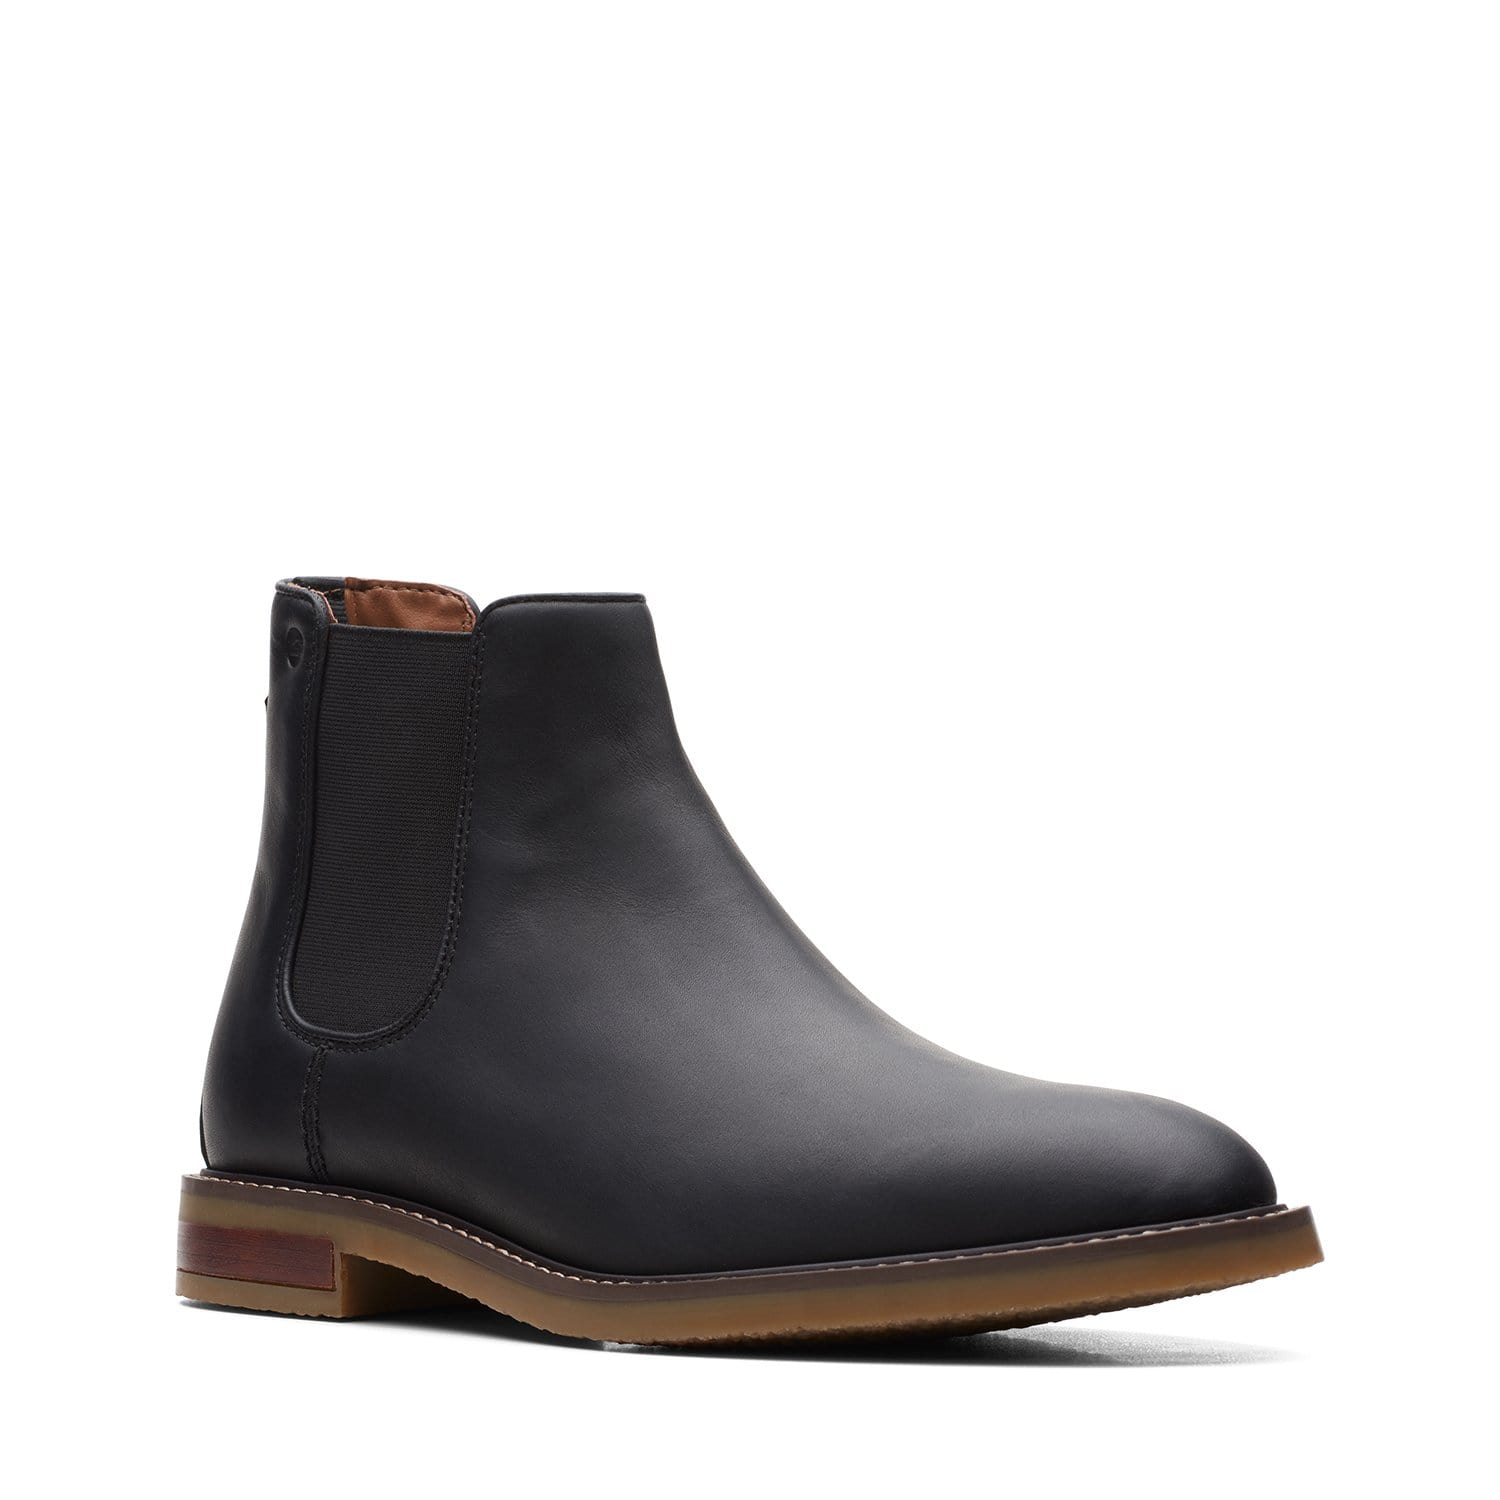 Clarks Jaxen Chelsea - Boots - Black Leather - 261627297 - G Width (Standard Fit)